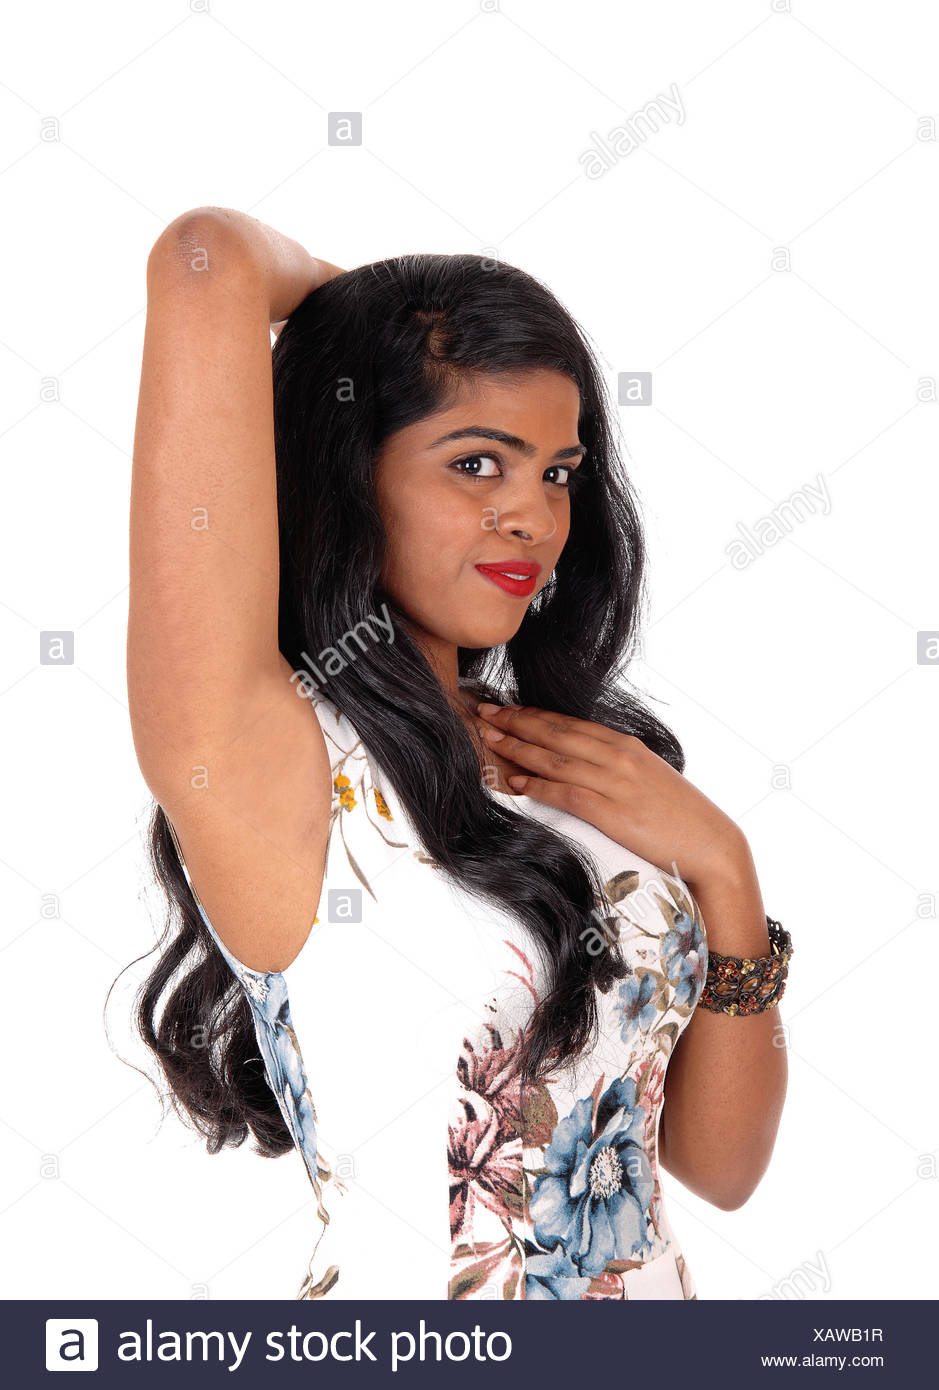 https://c8.alamy.com/comp/XAWB1R/closeup-of-beautiful-indian-woman-XAWB1R.jpg